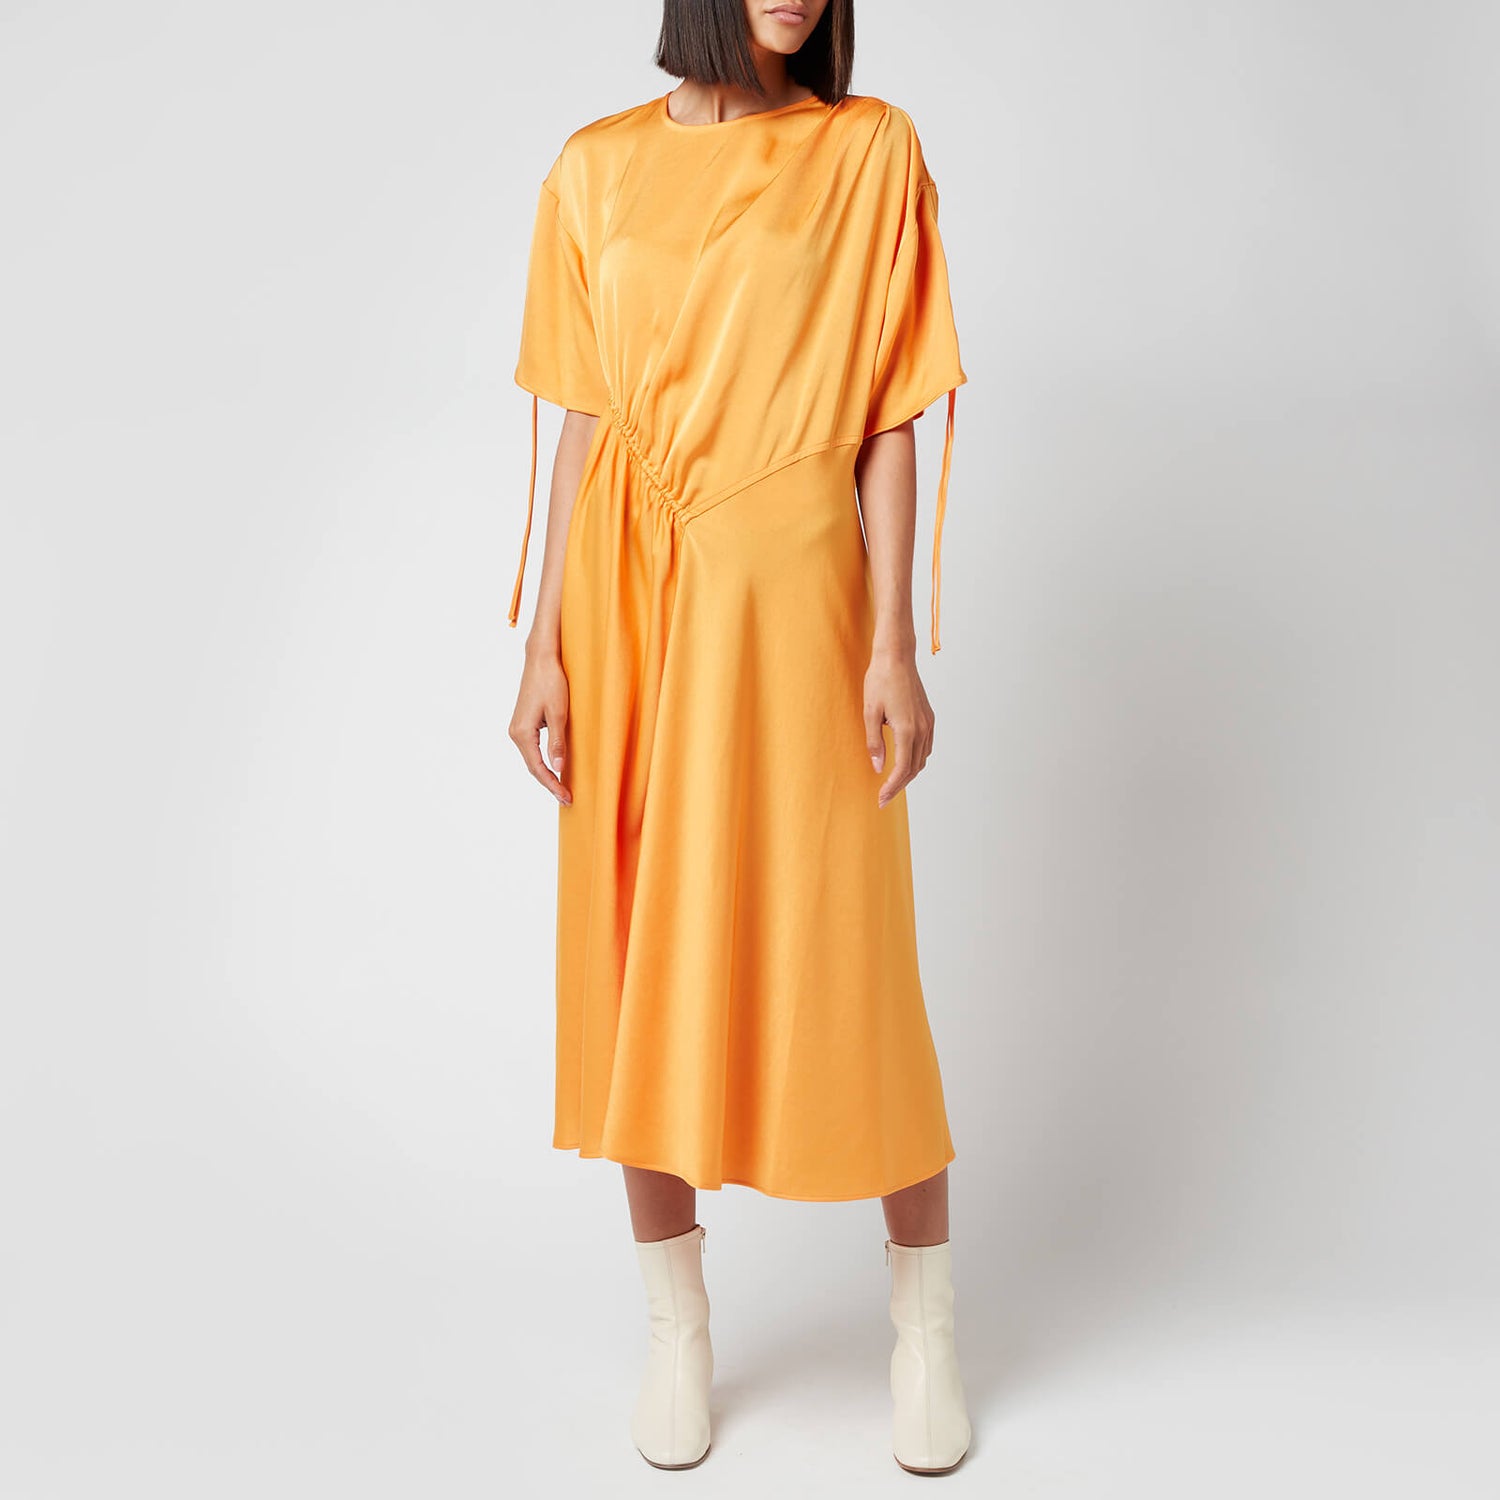 Stine Goya Women's Davina Dress - Orange - Free UK Delivery Available